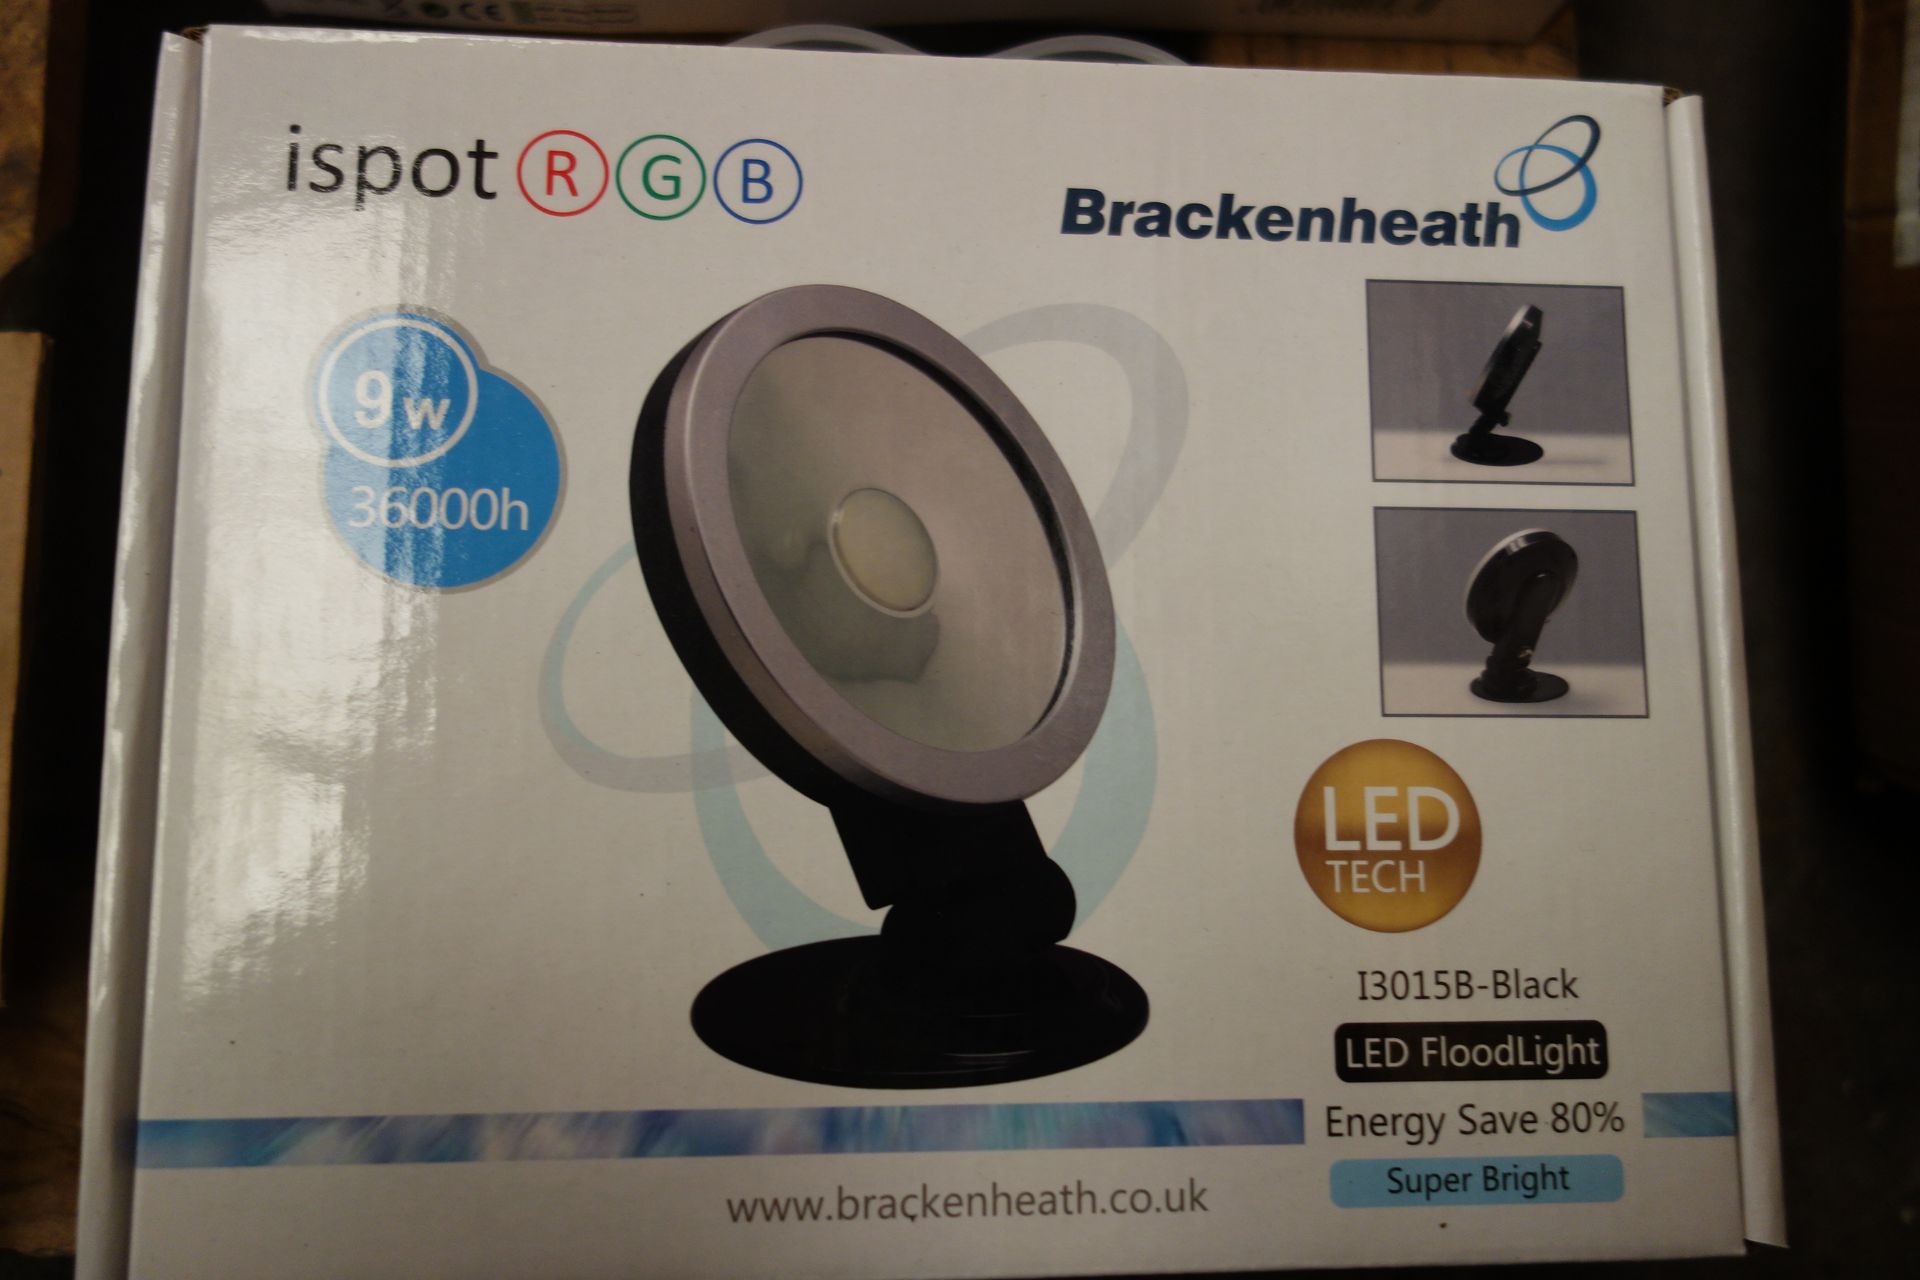 5 X Brakenheath I3015B-Black 9W Ispot RCB Colour Changing With Remote Control Super Bright Energy